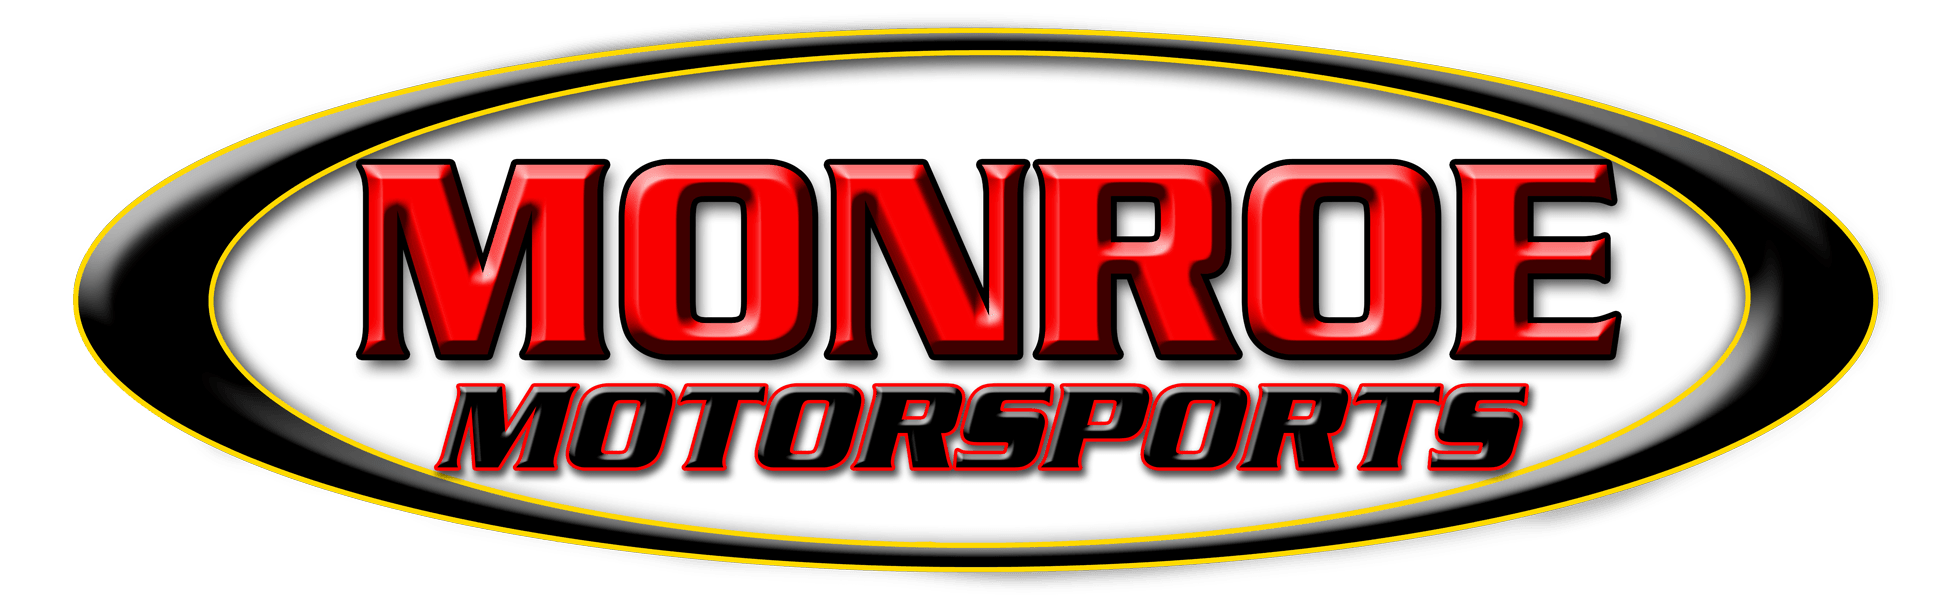 Monroe Motorsports, located in Monroe, Michigan